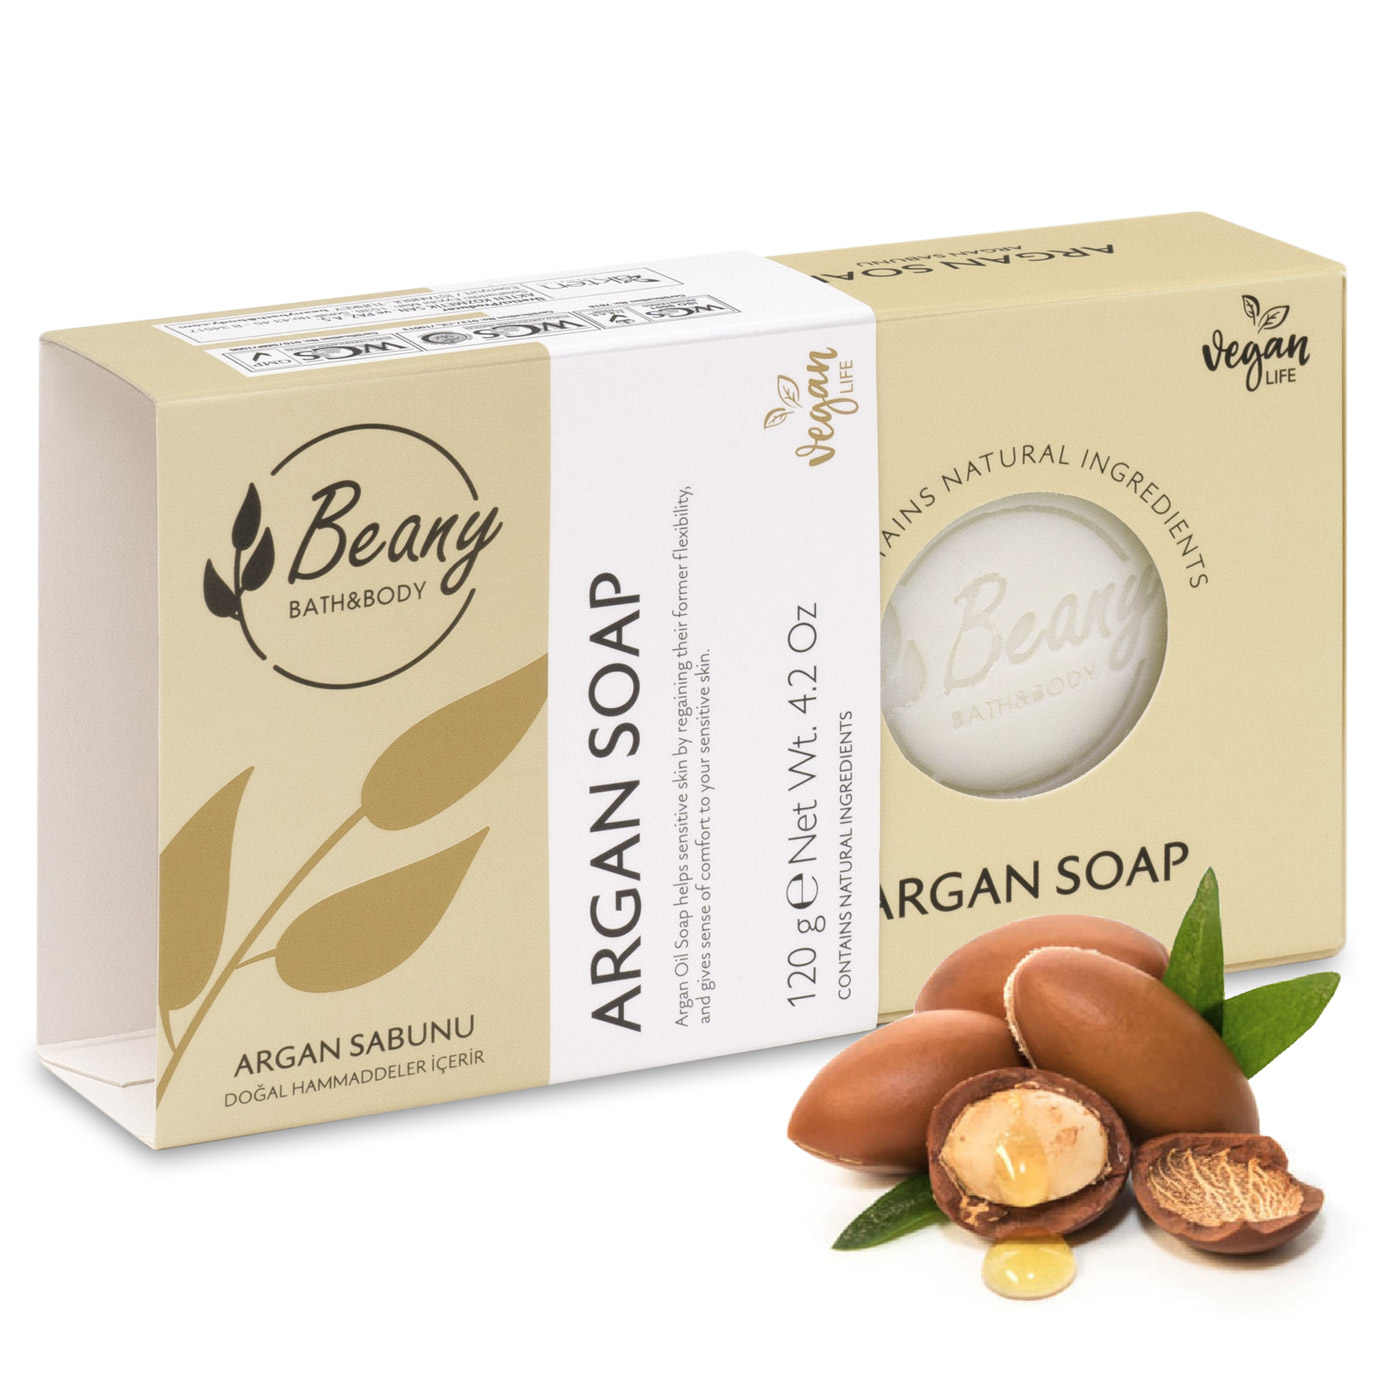 Мыло Beany твердое натуральное турецкое Argan Oil Soap с аргановым маслом мыло beany твердое натуральное турецкое argan oil soap с аргановым маслом 2шт х 120г